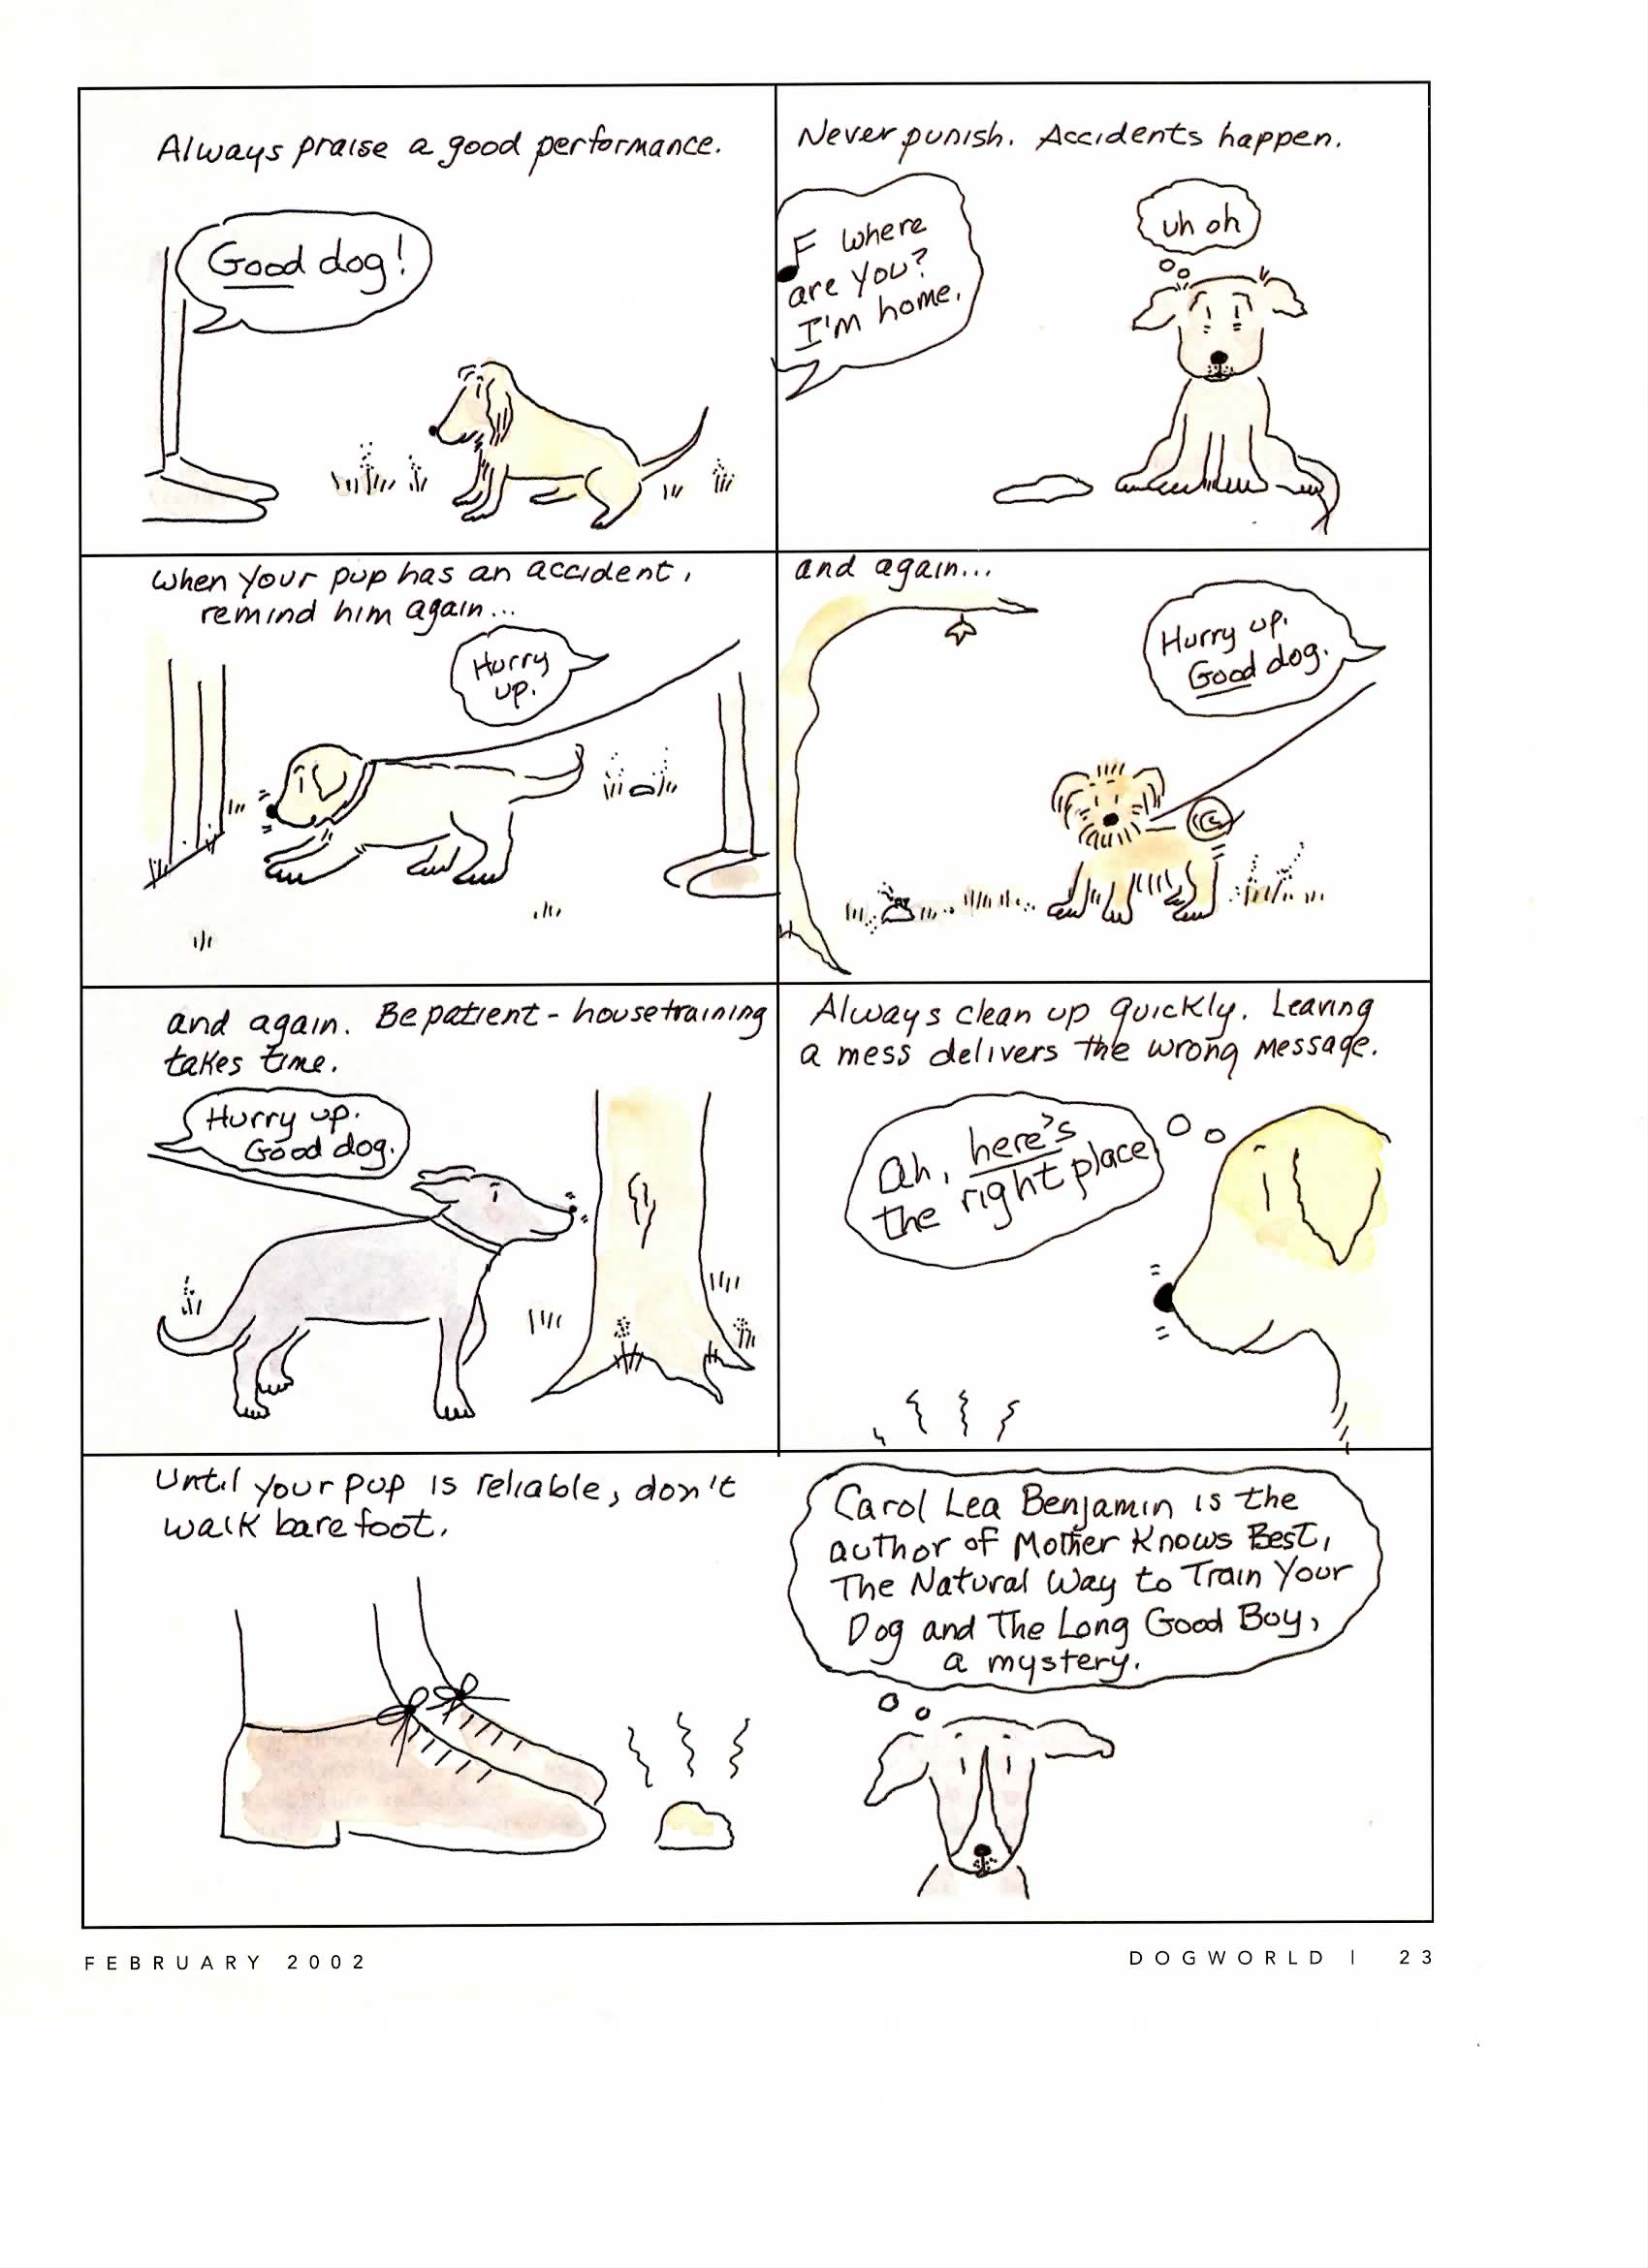 house training a puppy | Carol Lea Benjamin on Dogs